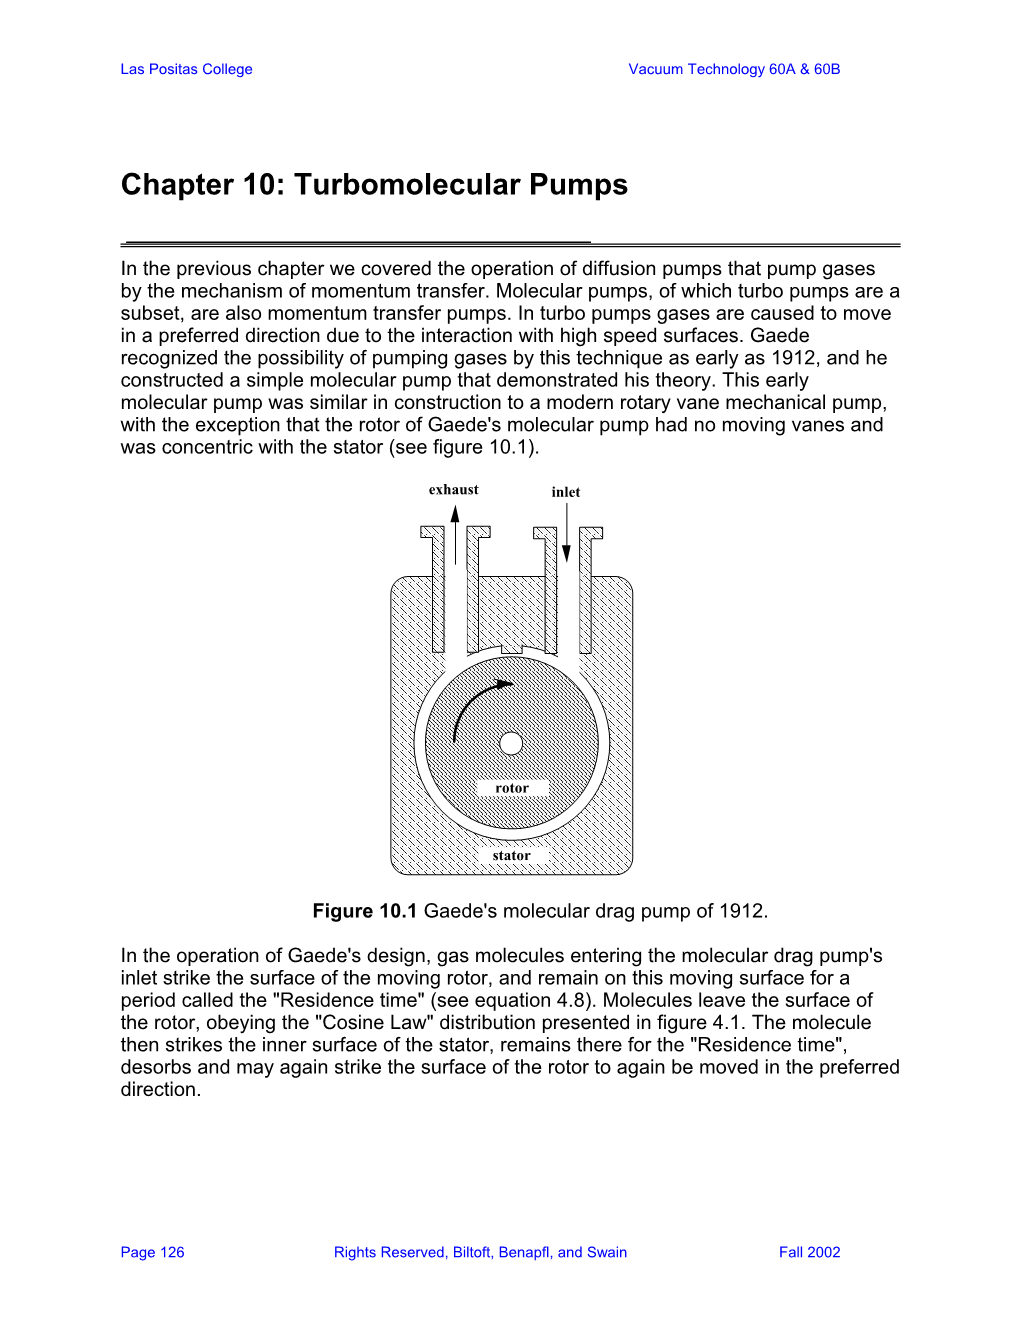 Turbomolecular Pumps